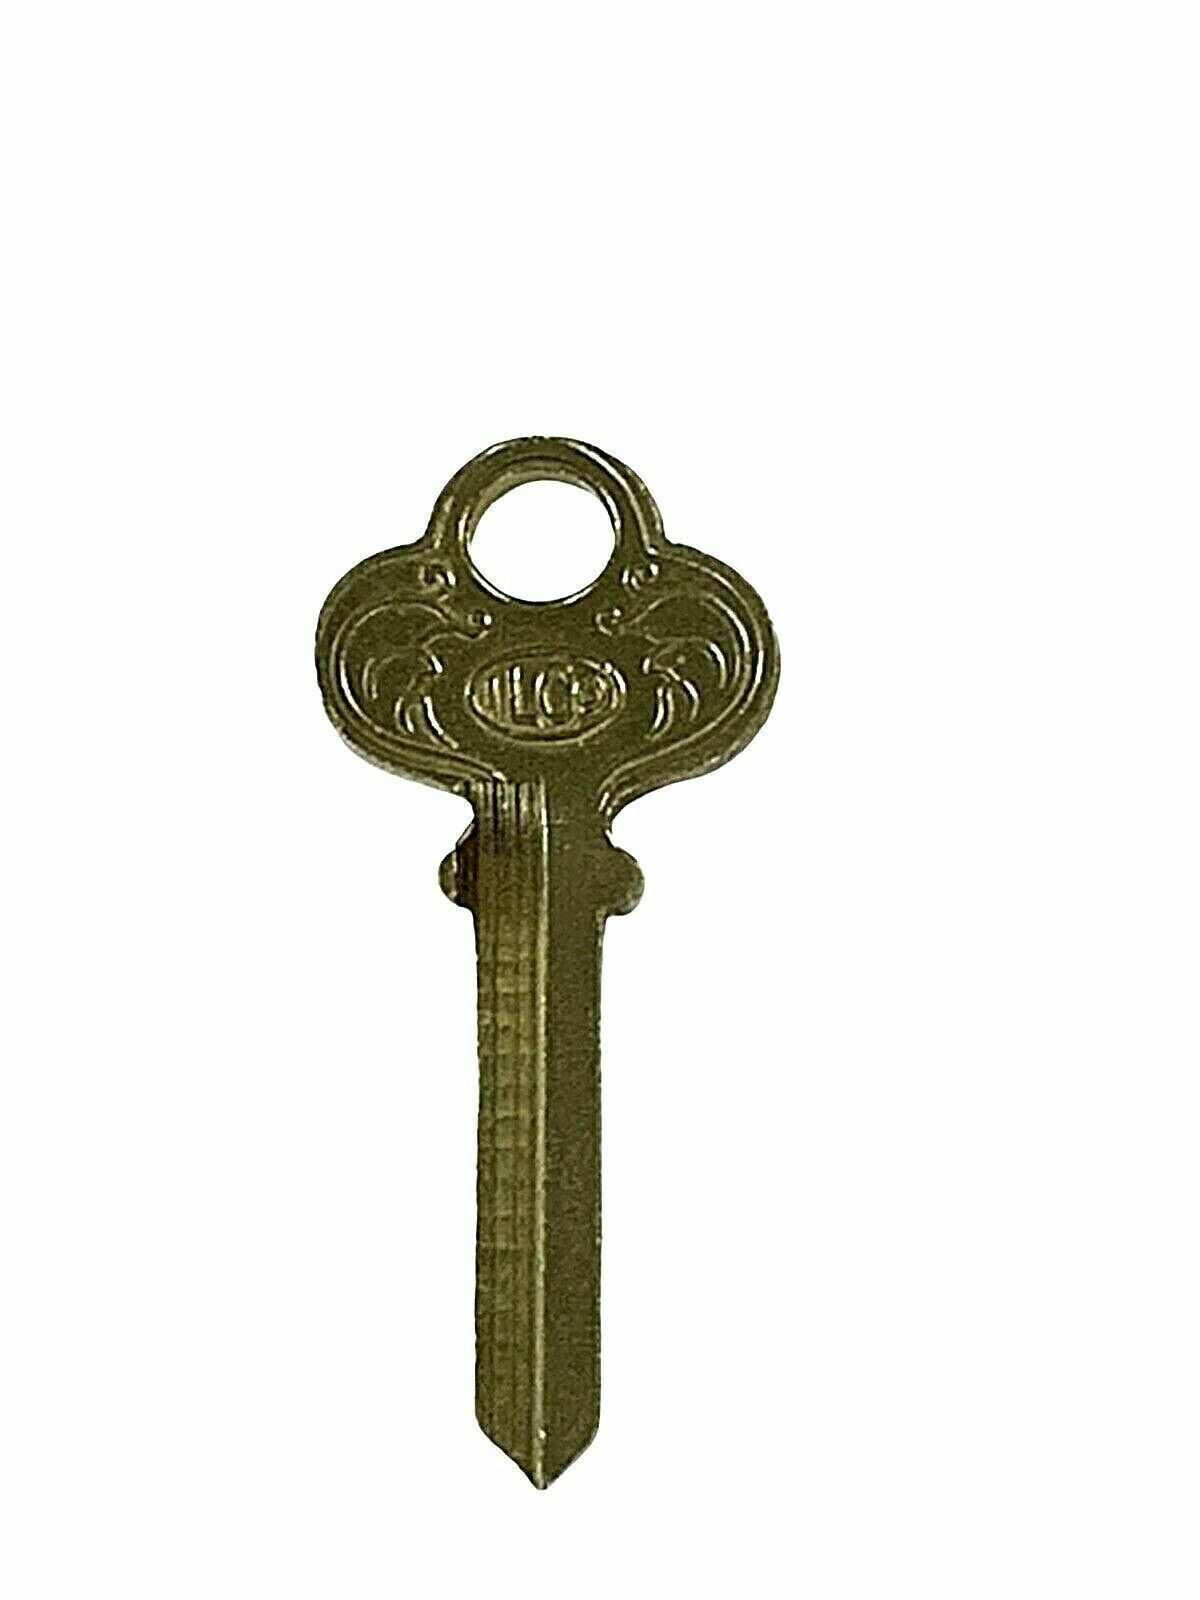 1 Corbin Ilco Antique Ornate Small Rare Key 1000B CO14 Key Blank Blanks Keys